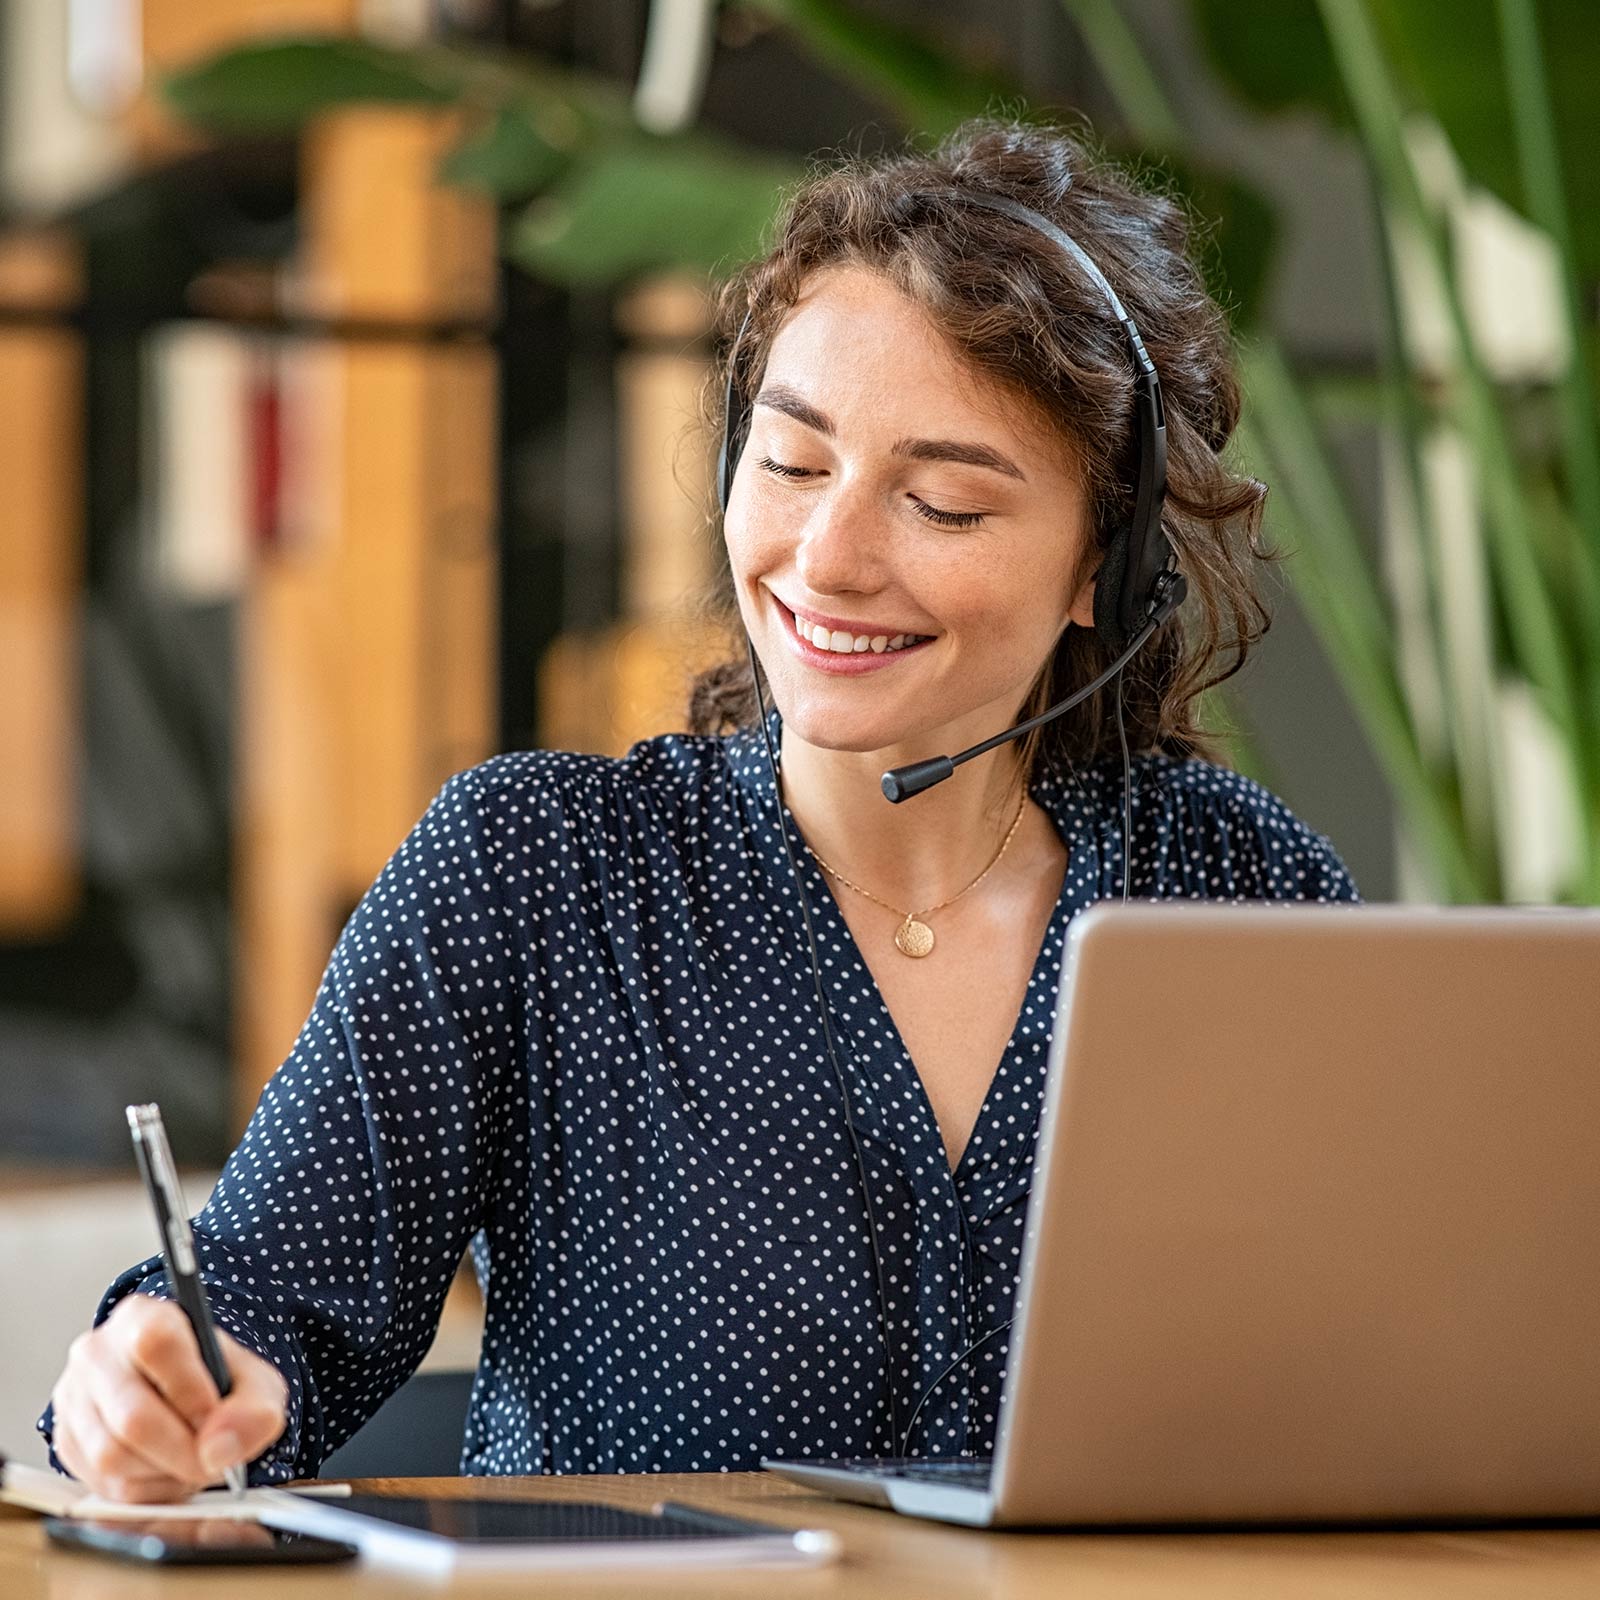 A customer representative smiling while writing